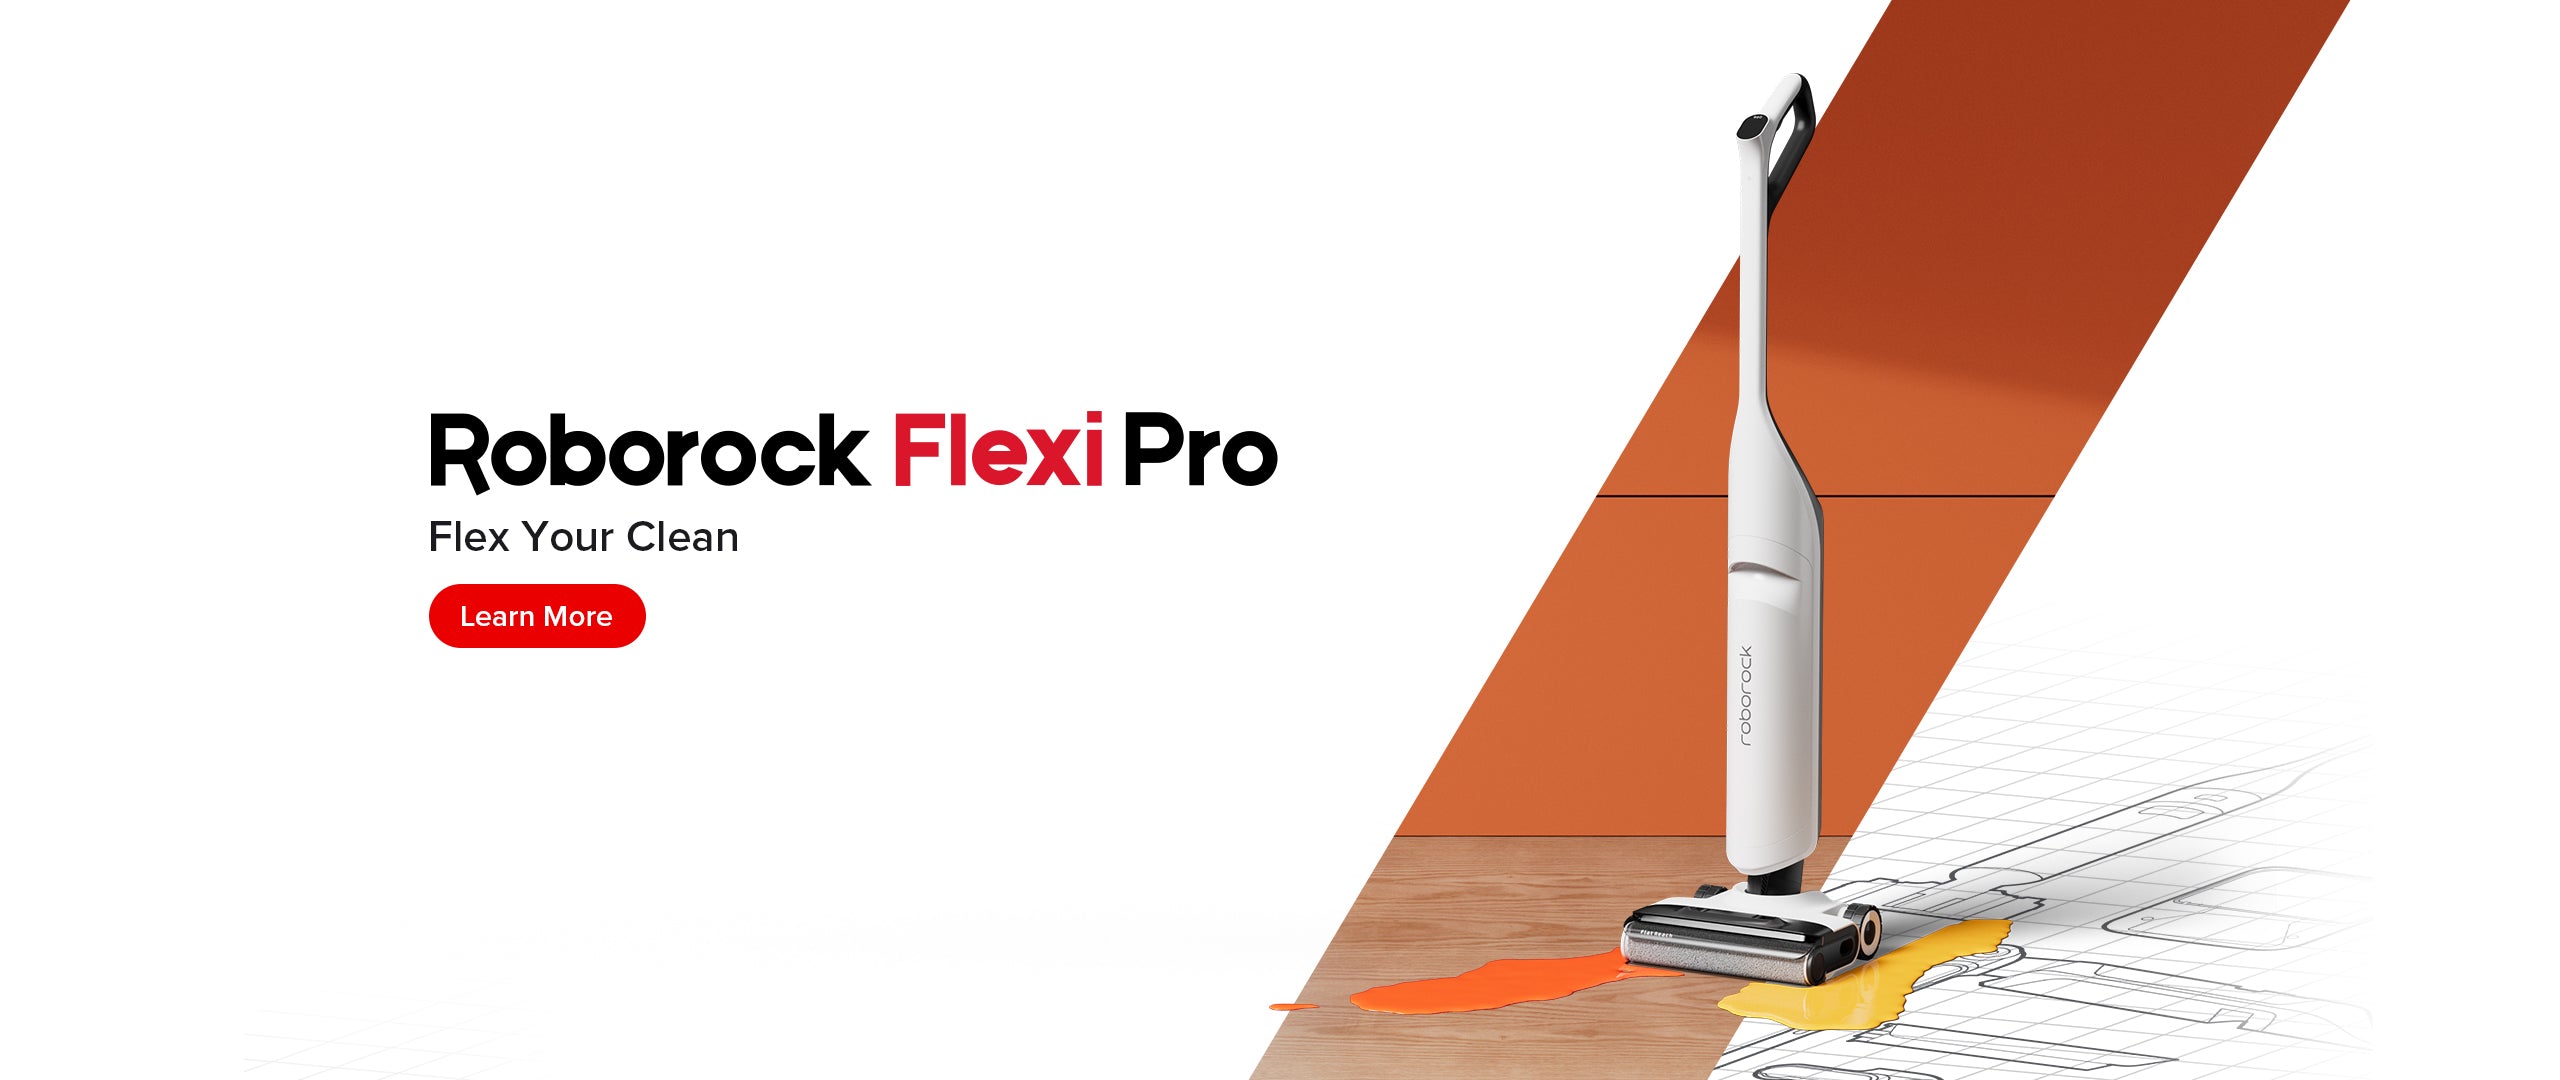 Roborock Flexi Pro Launch